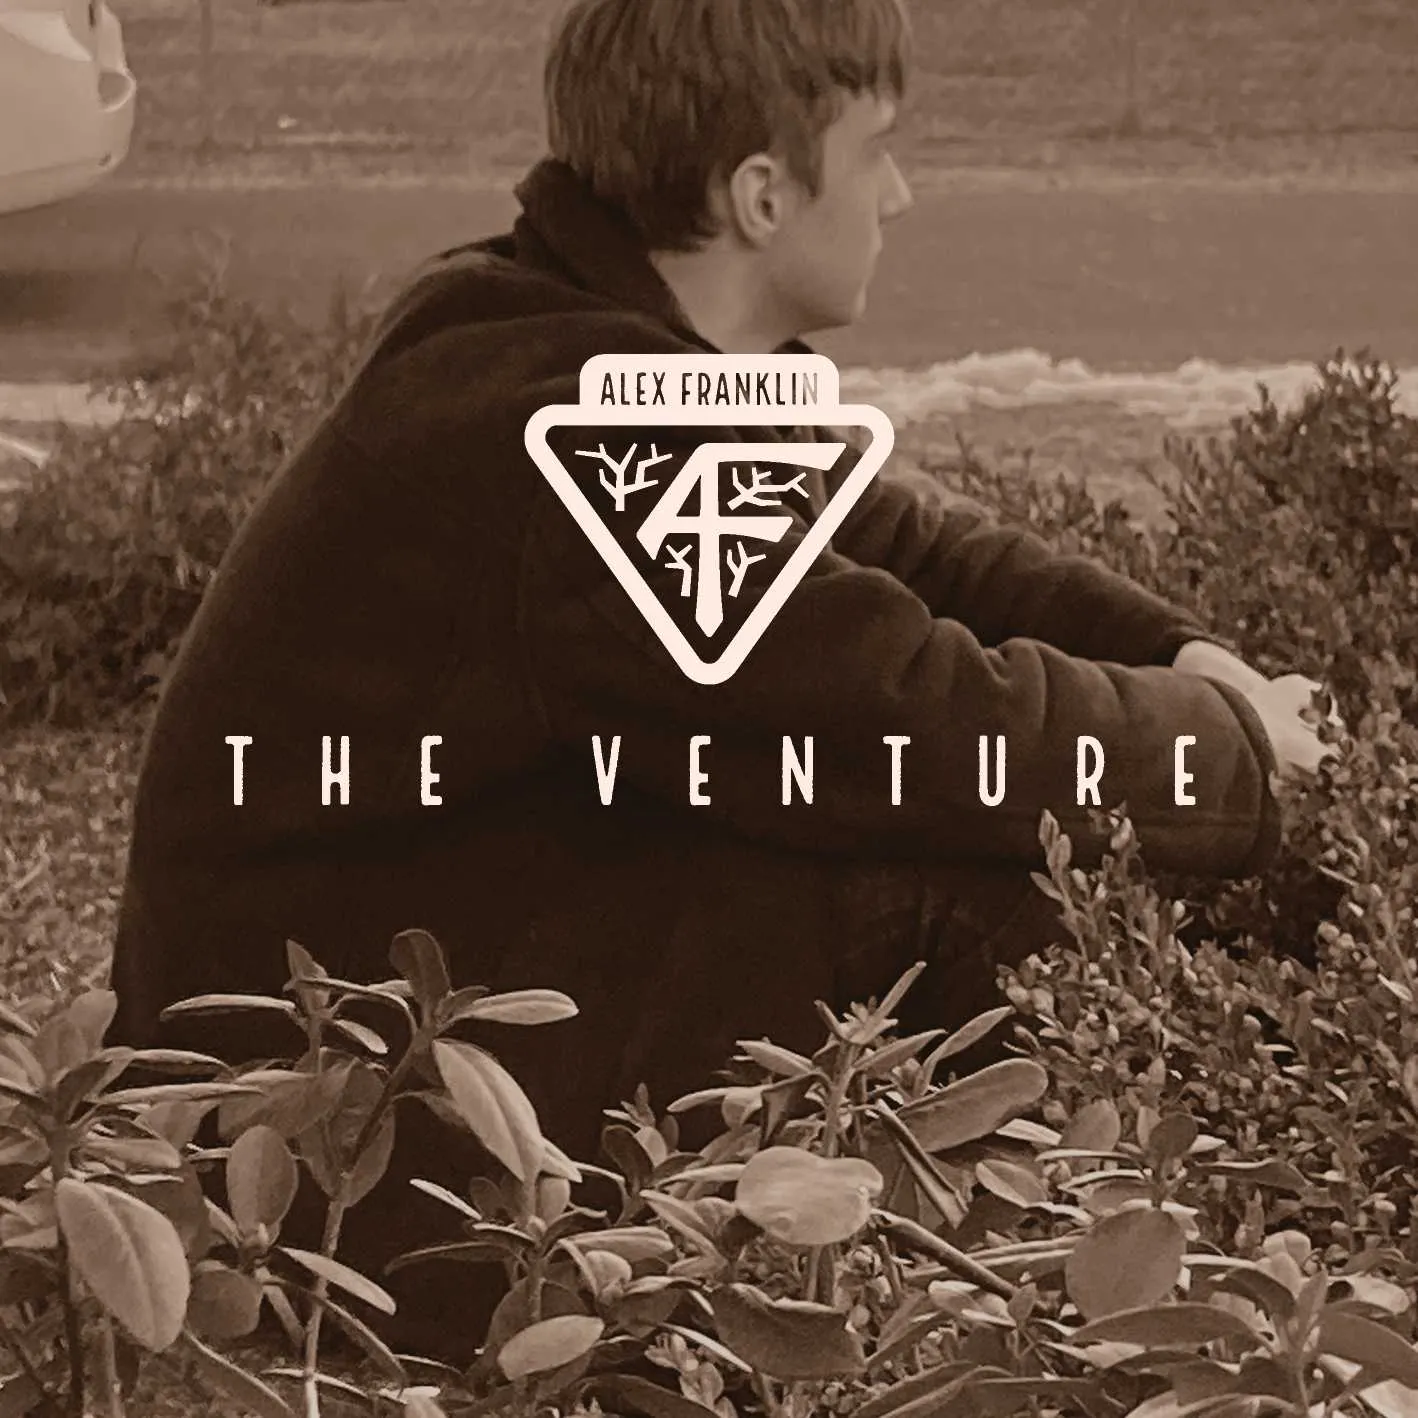 Album cover for “The Venture” by Alex Franklin